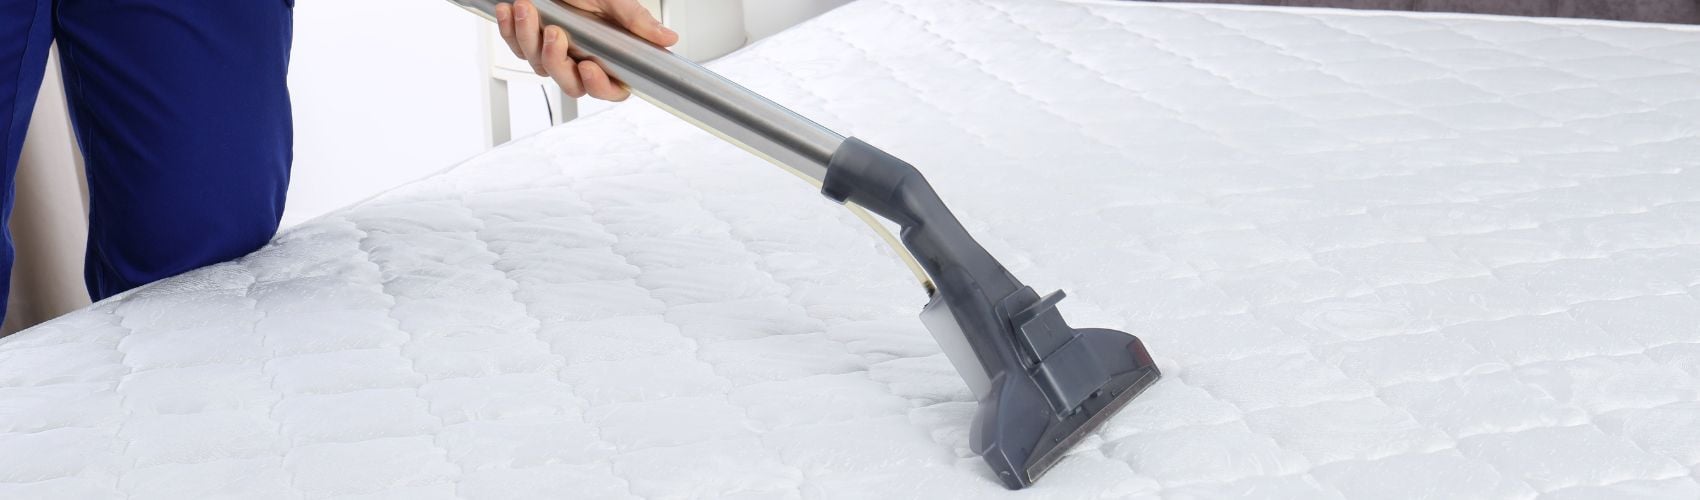 Vacuuming a mattress